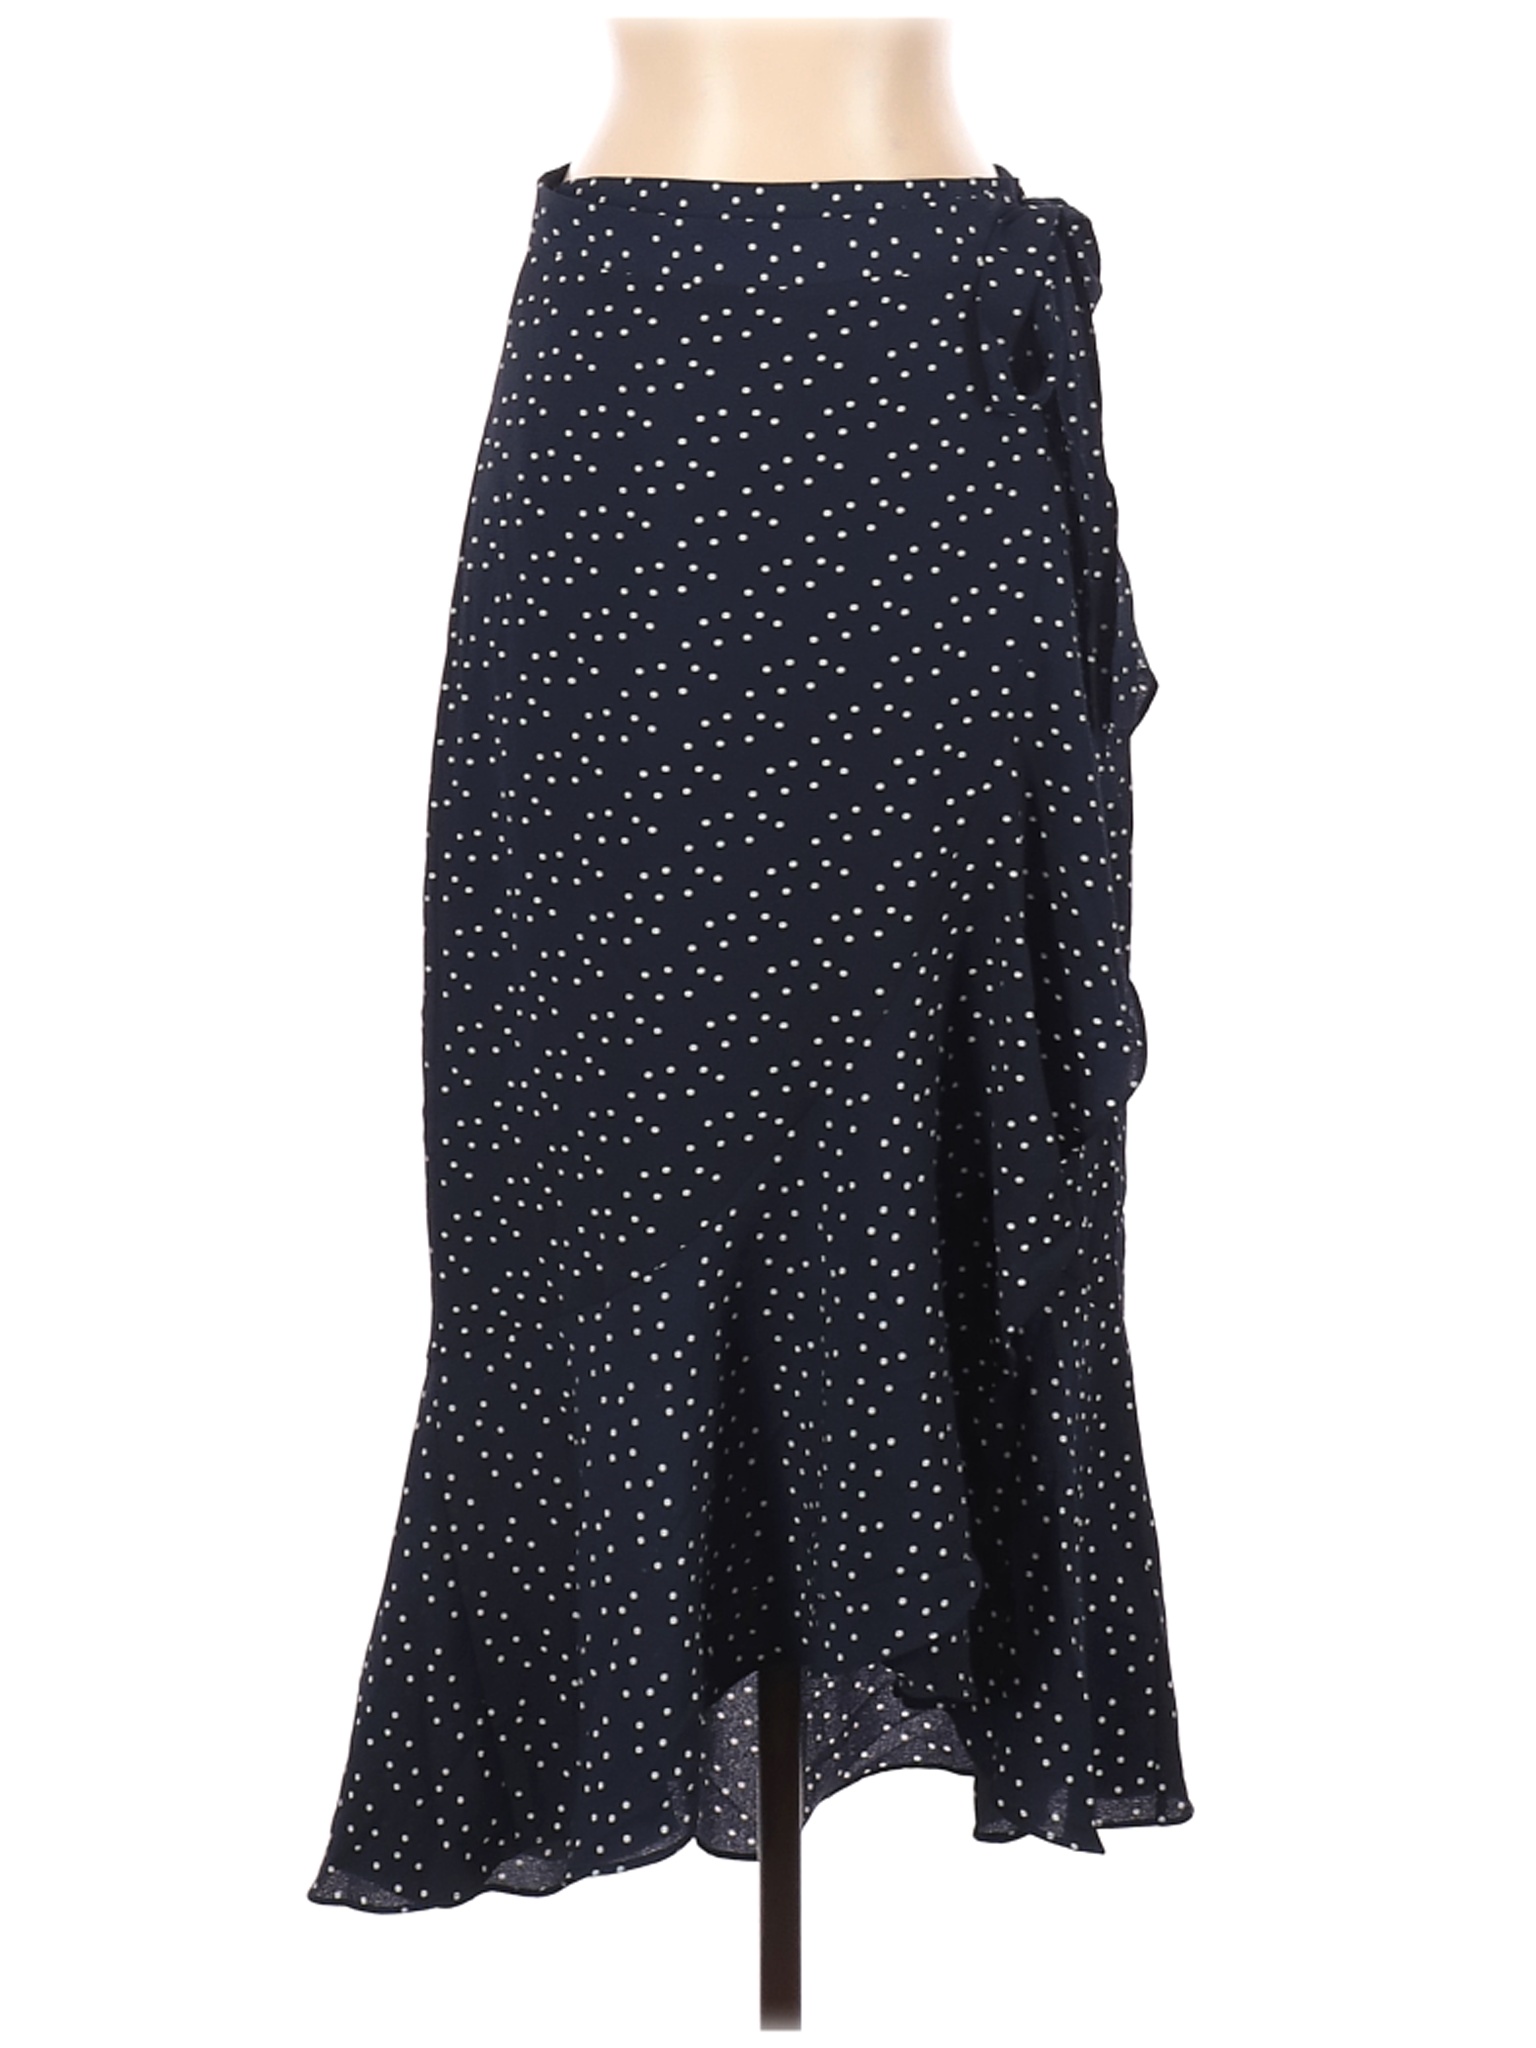 NWT Max Studio Women Black Casual Skirt XS | eBay